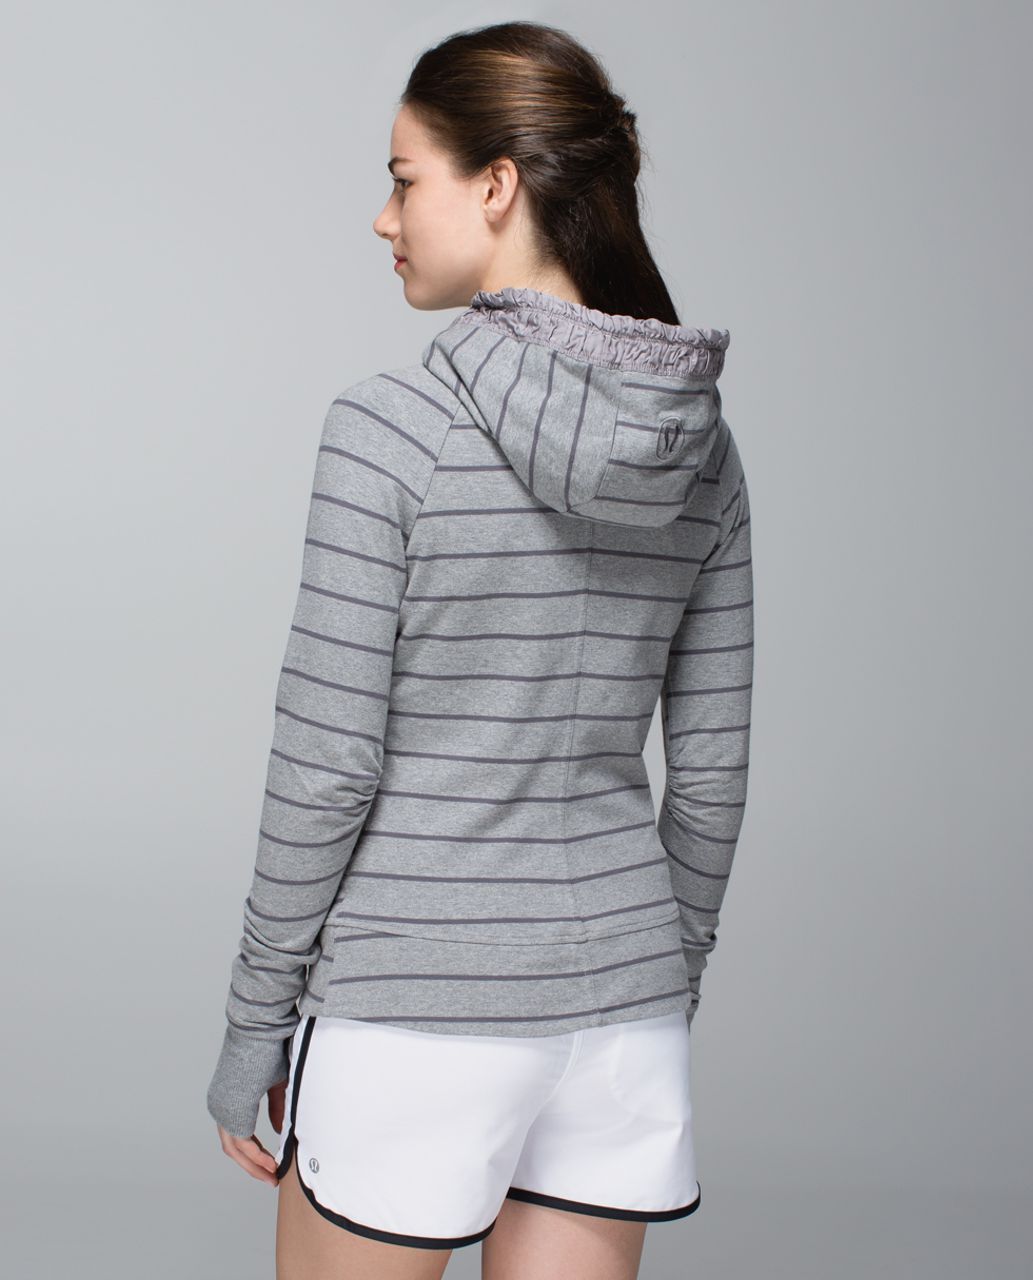 lululemon striped hoodie